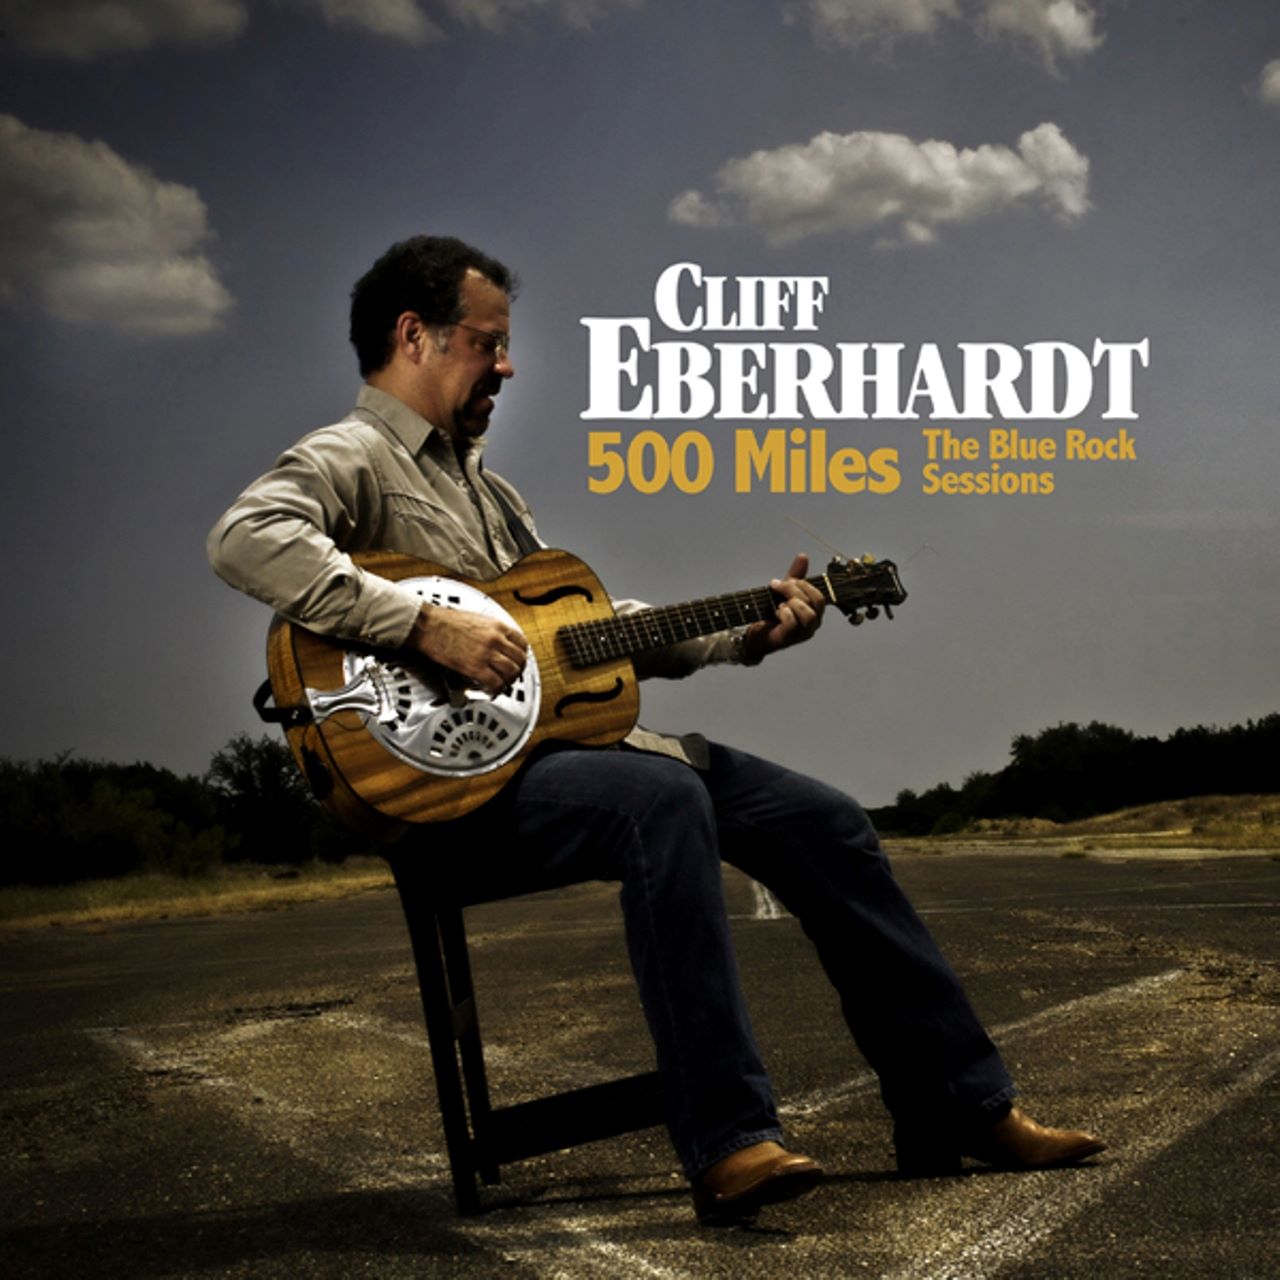 Cliff Eberhardt - 500 Miles The Blue Rock Sessions cover album